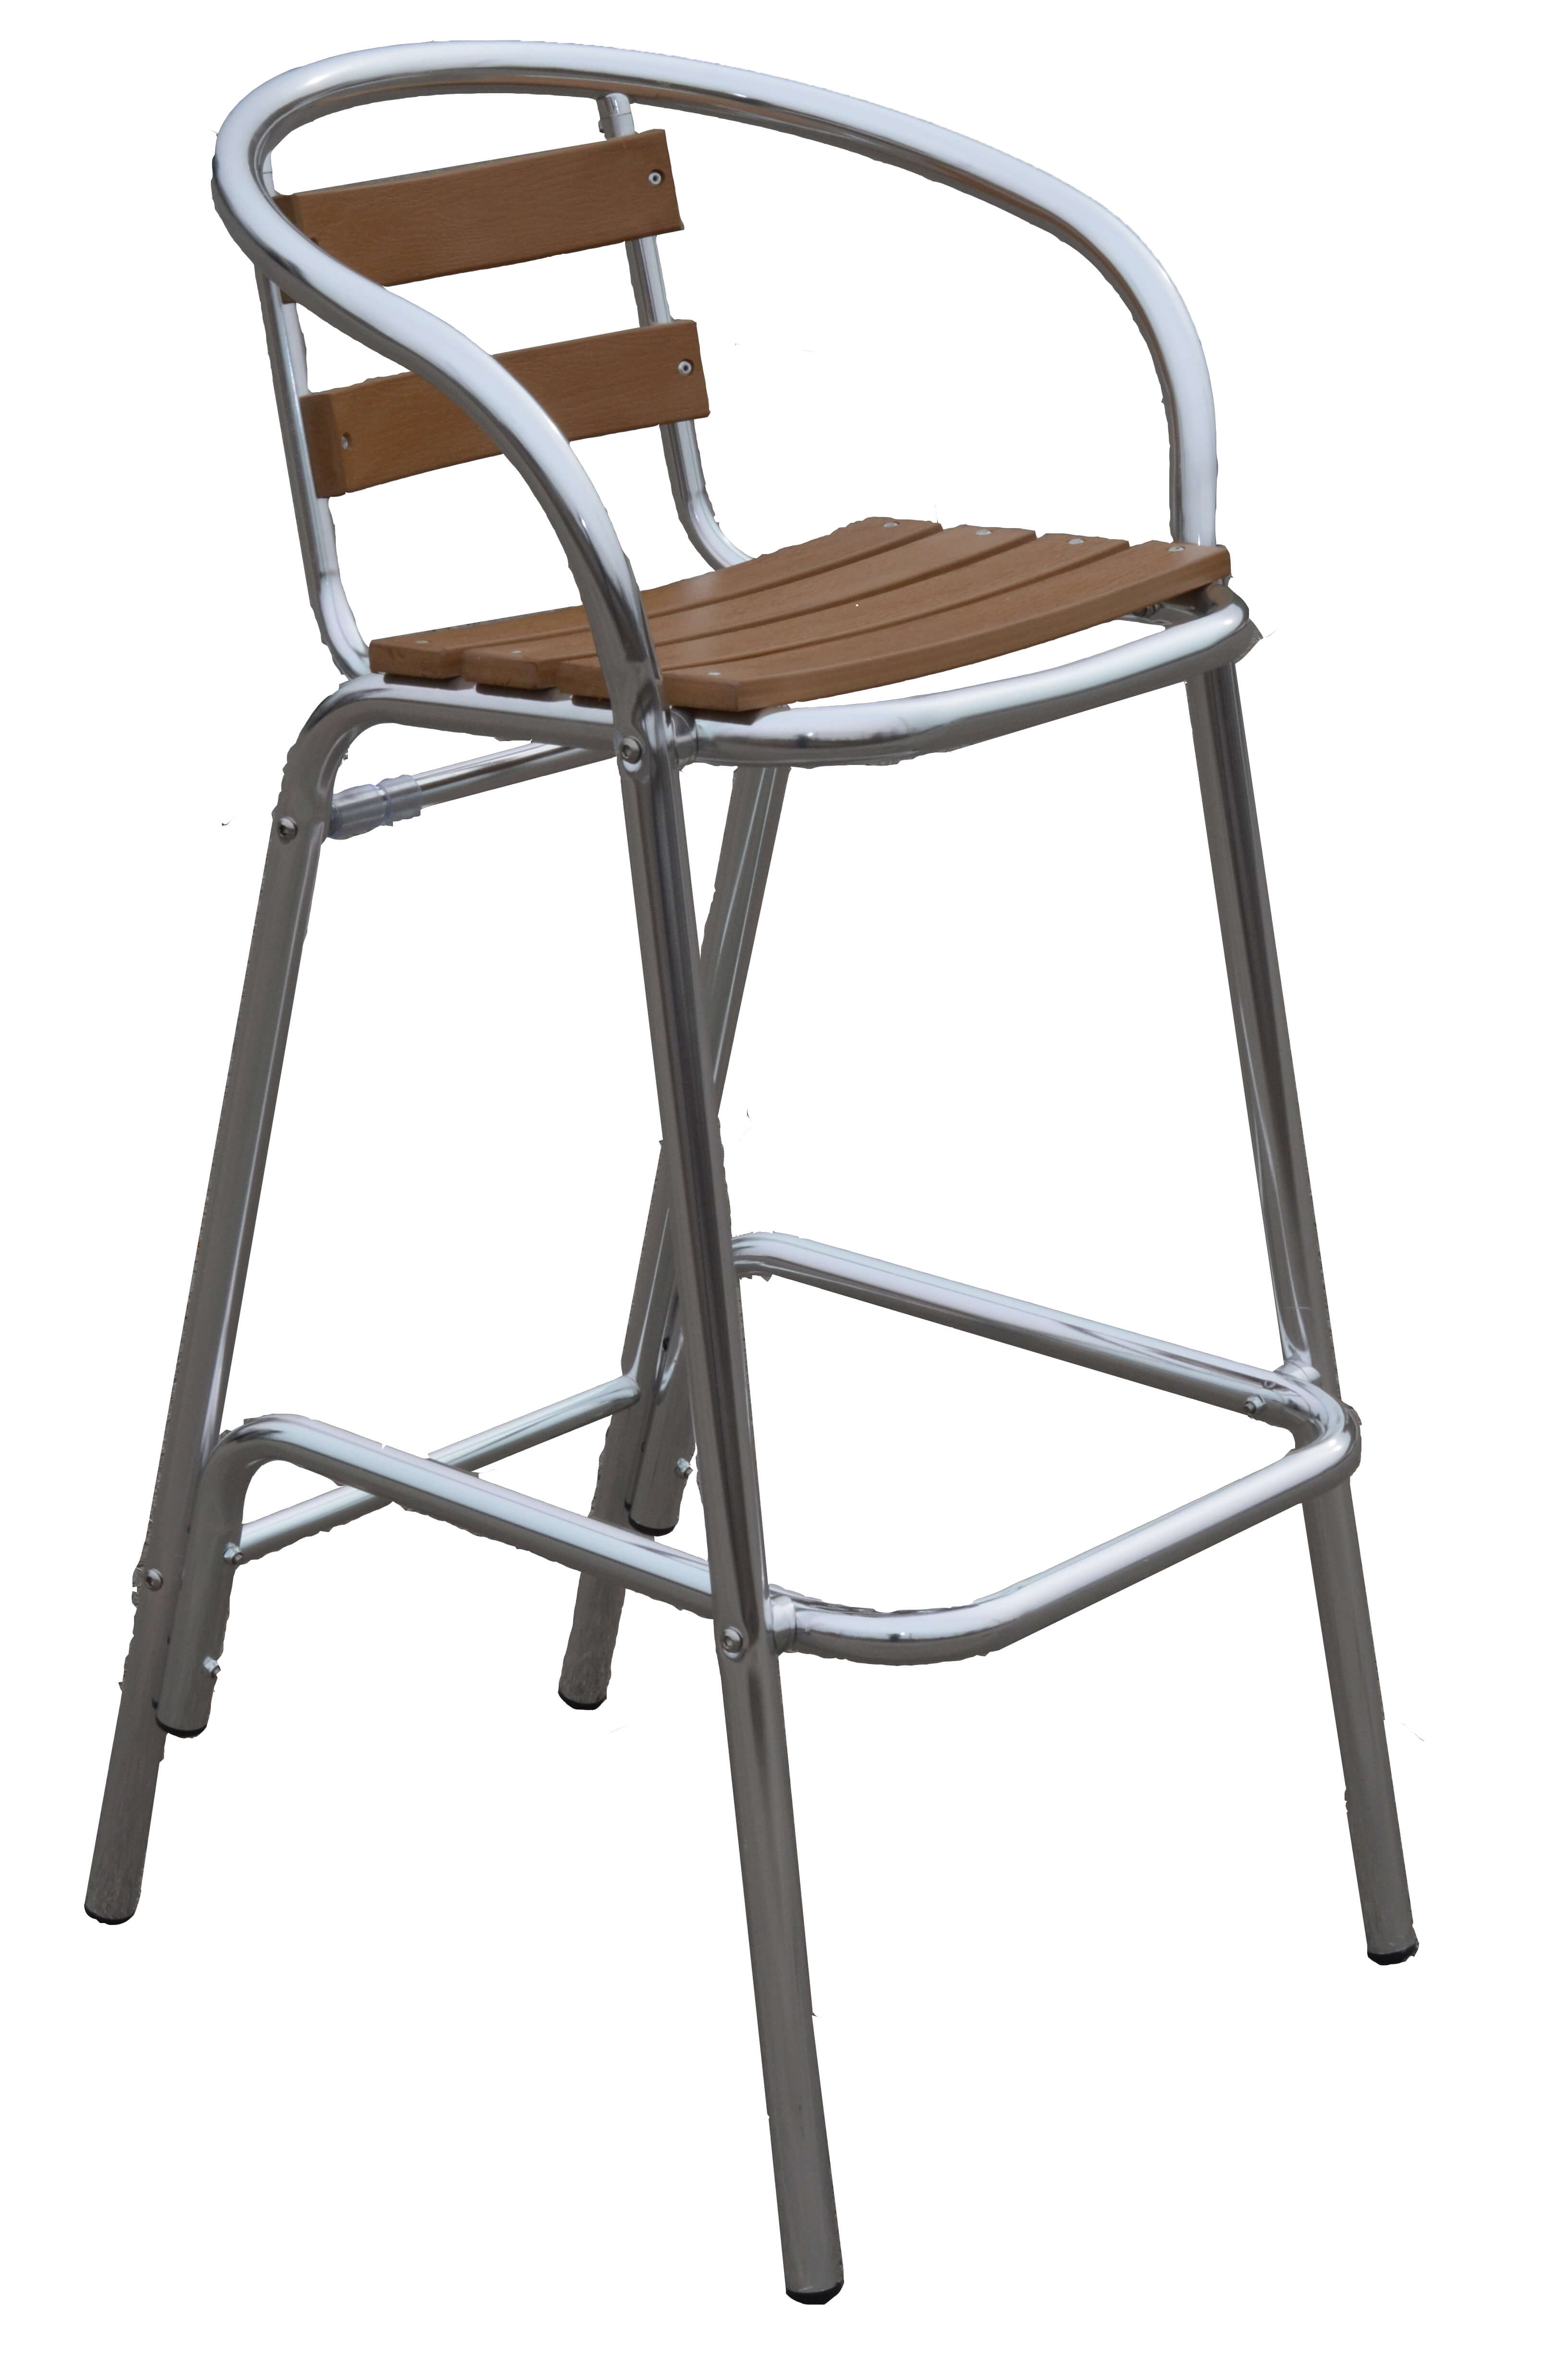 teak-inspired polywood bar stool